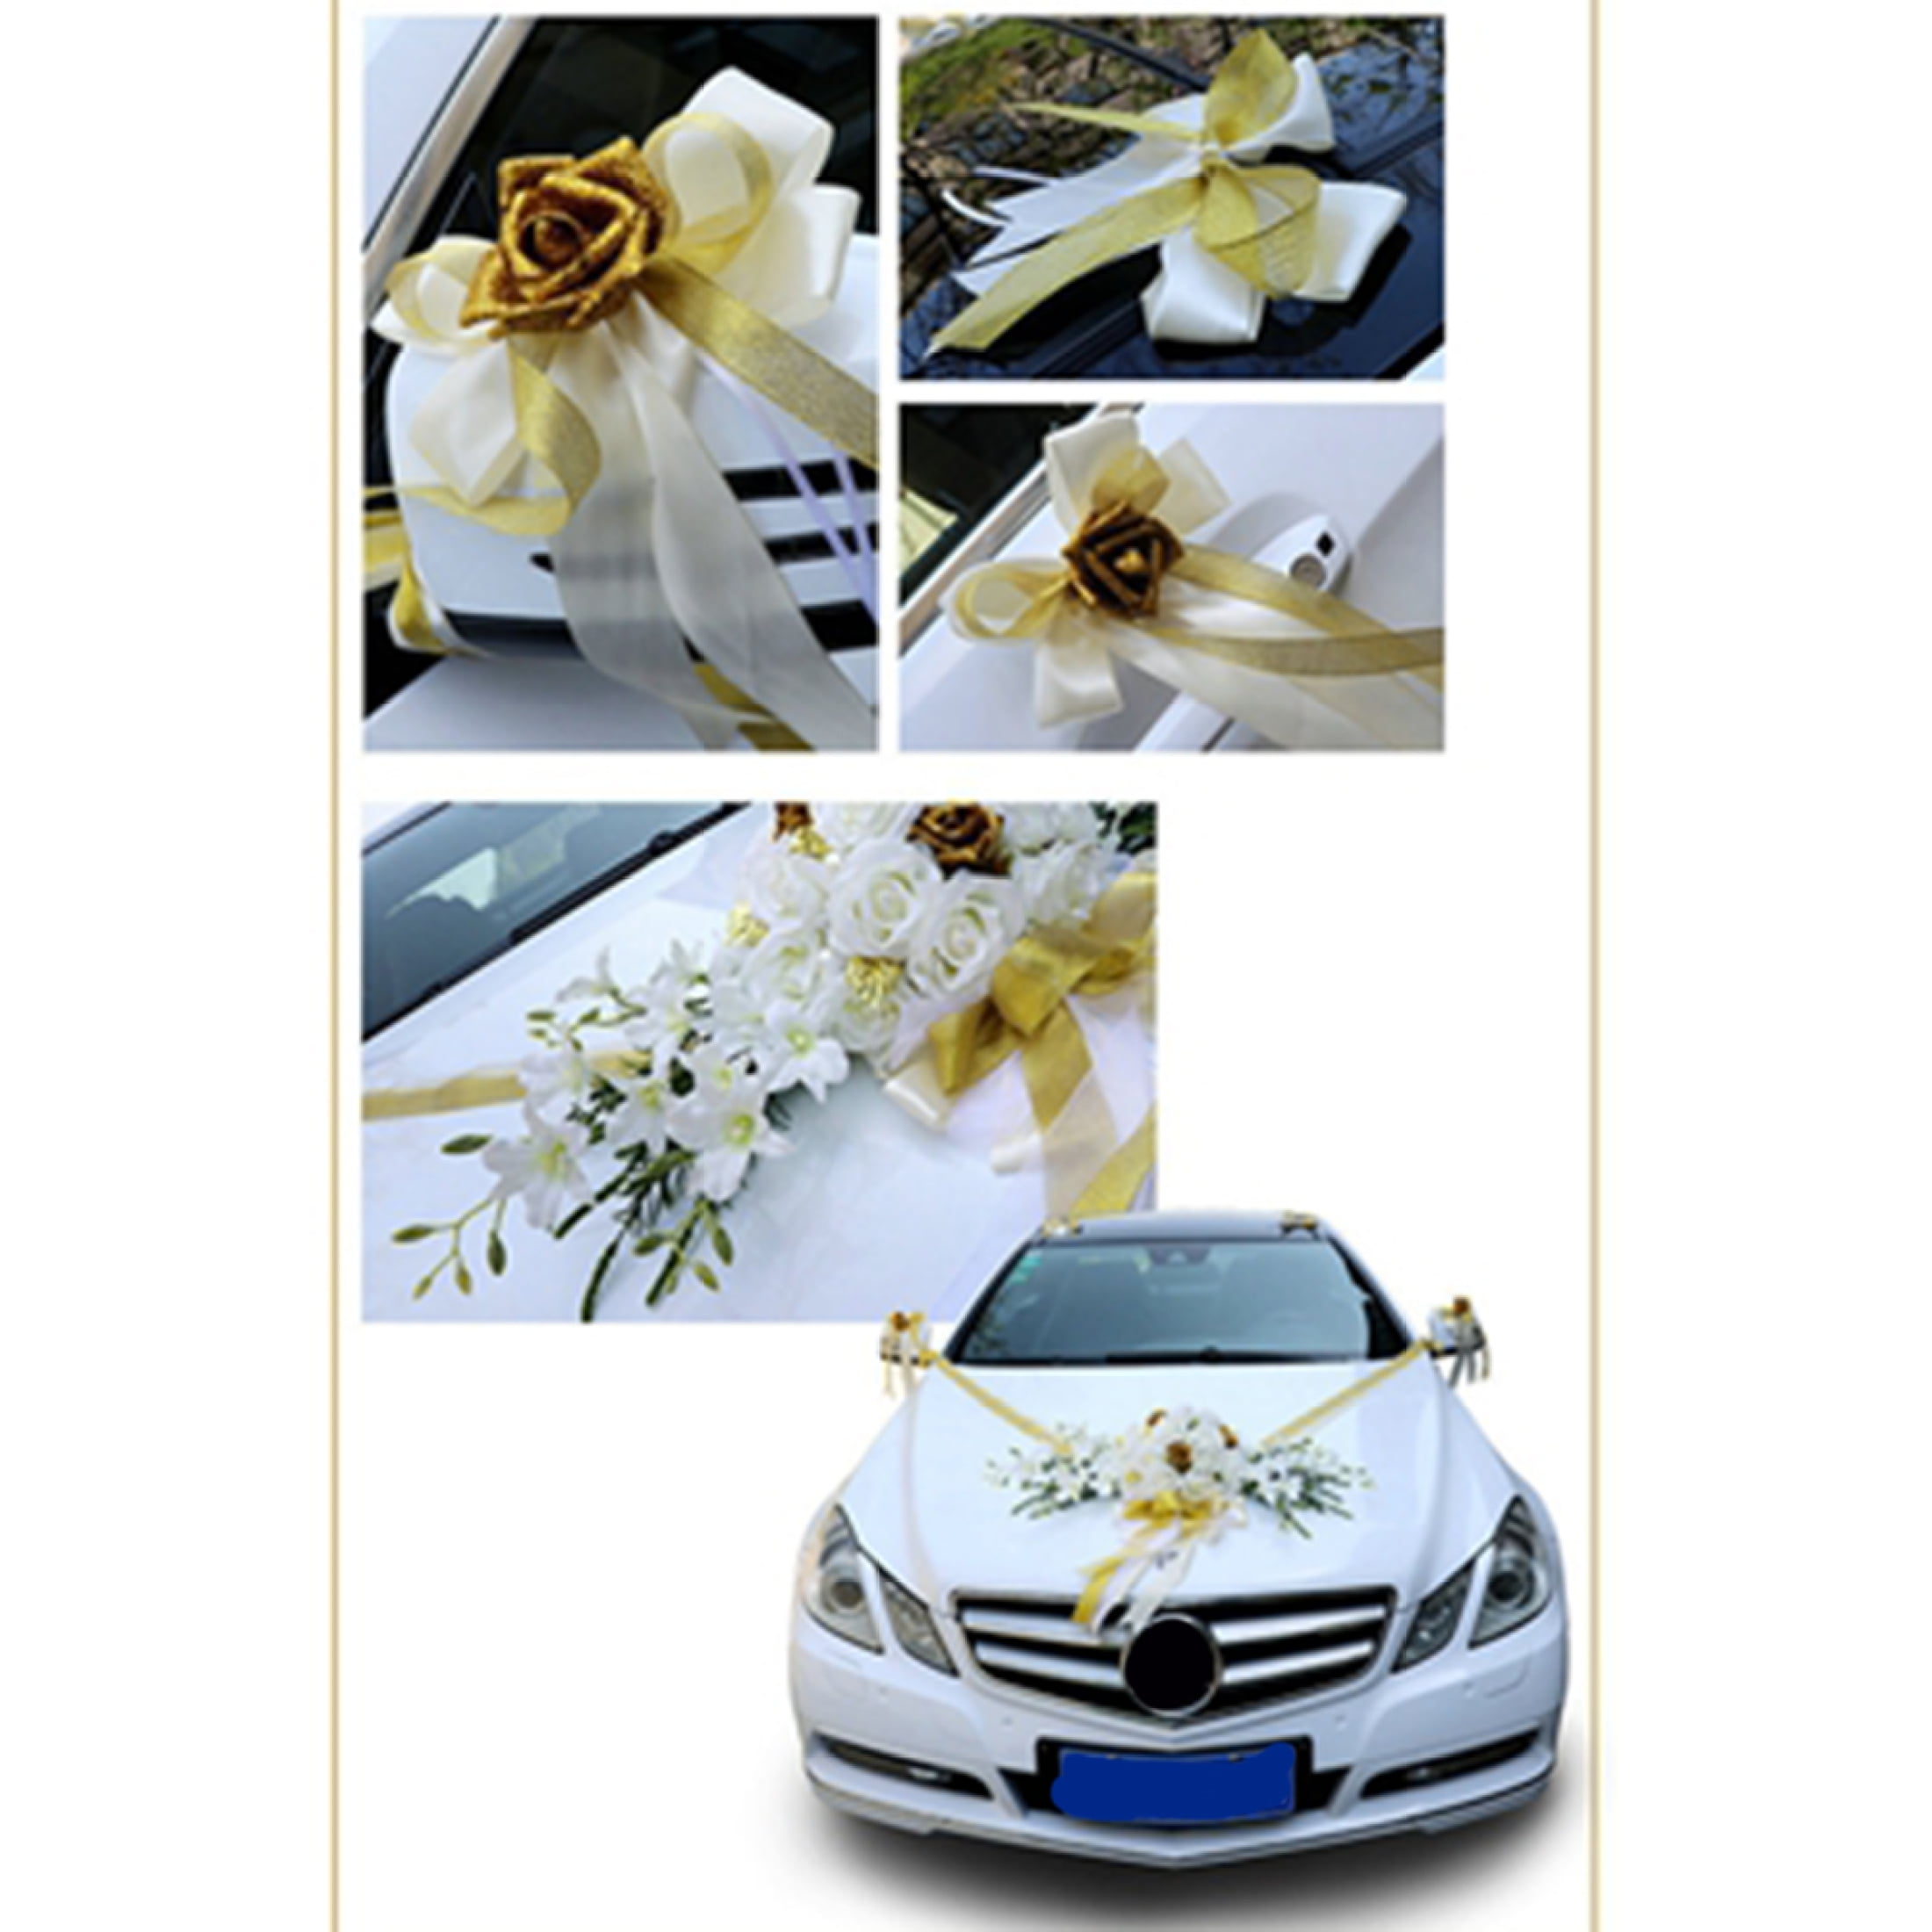  MoreChioce Wedding Car Flower Decoration, Artificial Rose  Flowers Ribbon Wedding Car Decoration Flowers Garland for Wedding  Party,White : Home & Kitchen